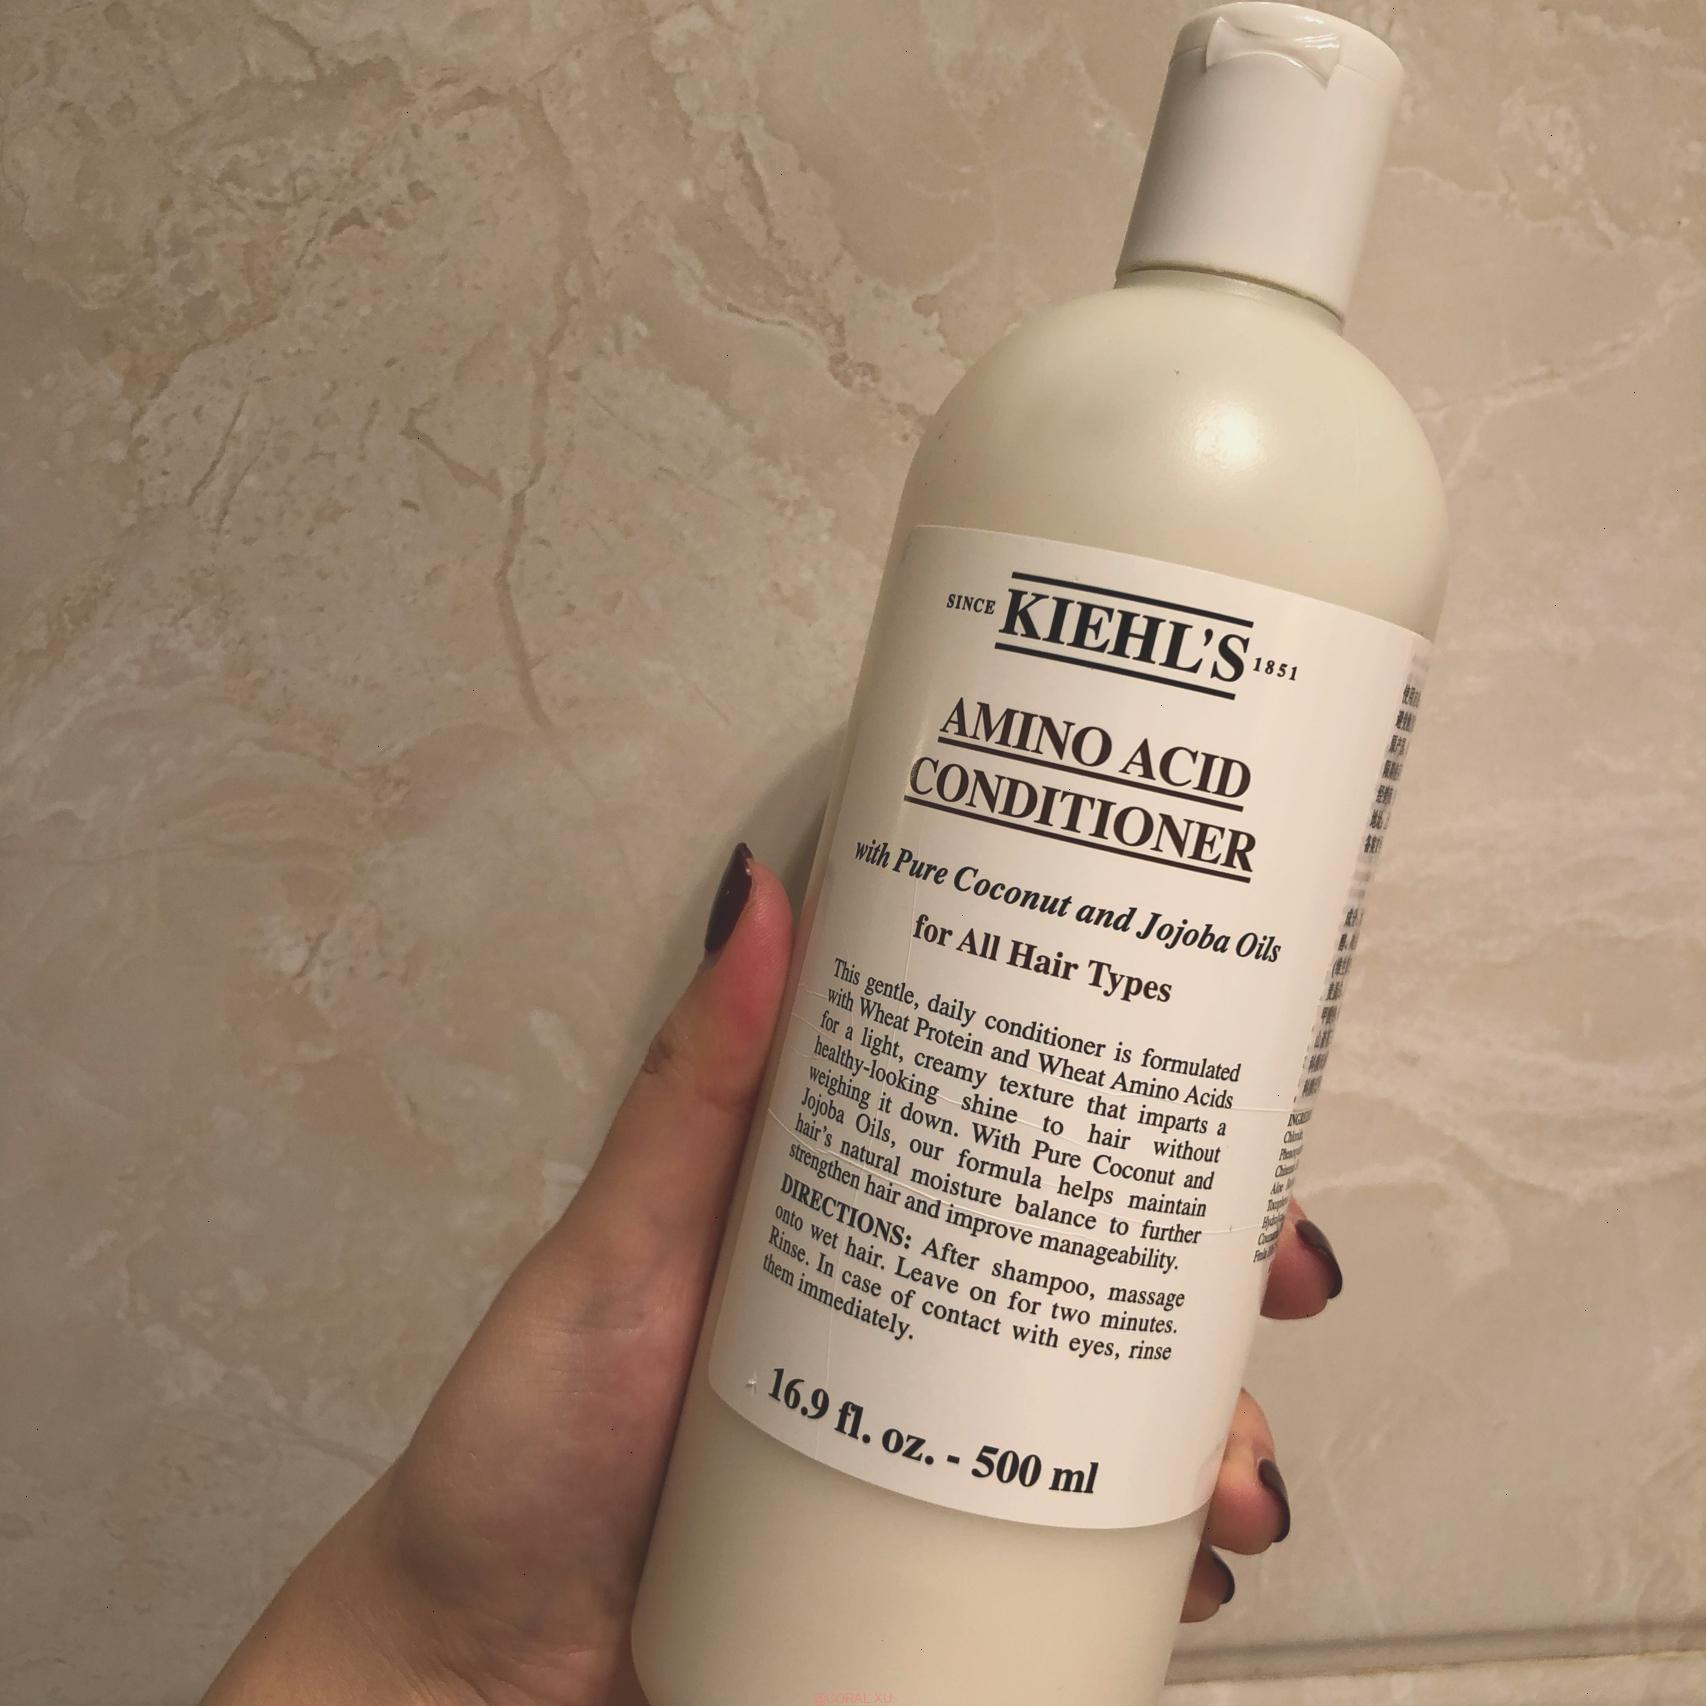 Kiehls Amino Acid Shampoo Review 2 1 - Kiehl’s Amino Acid Shampoo Review